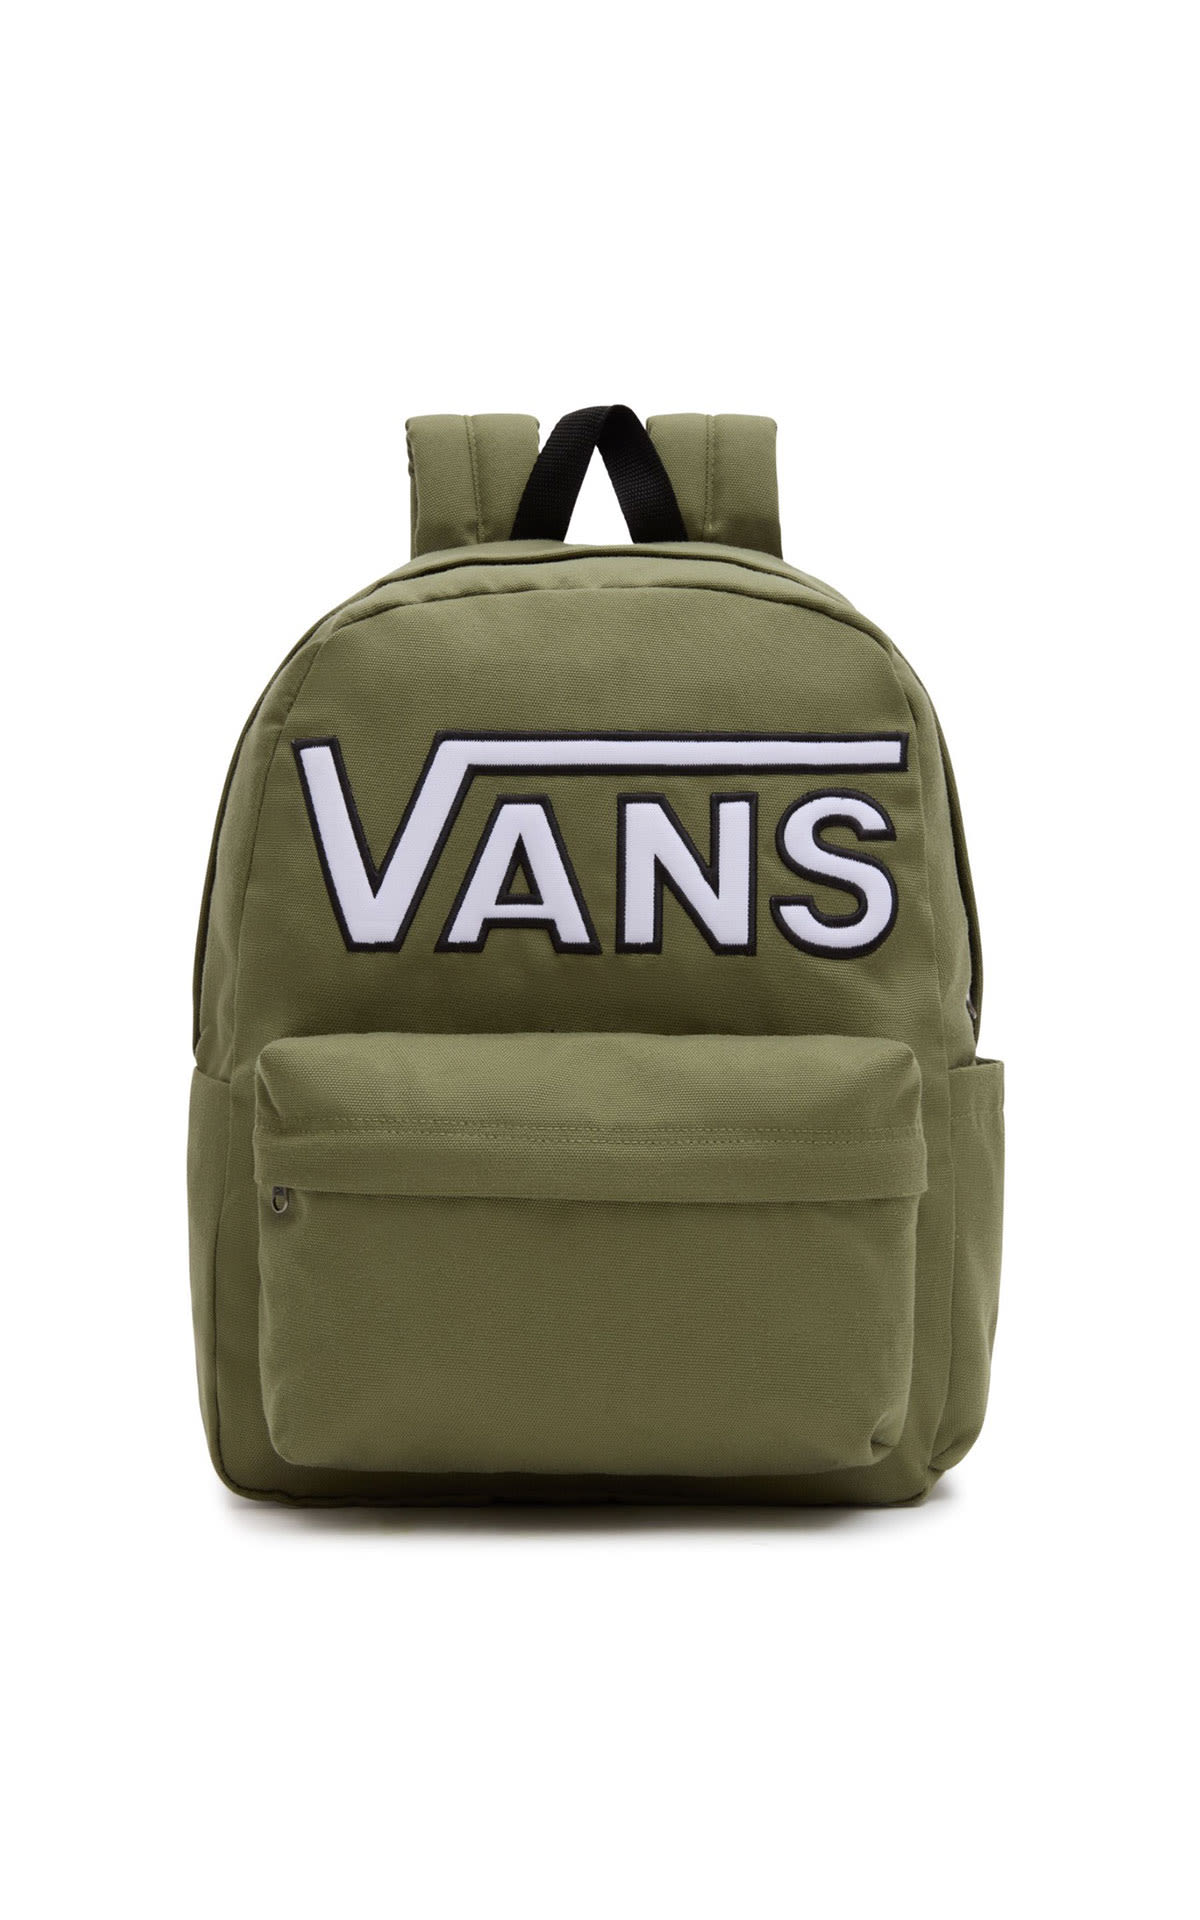 Green backpack Vans